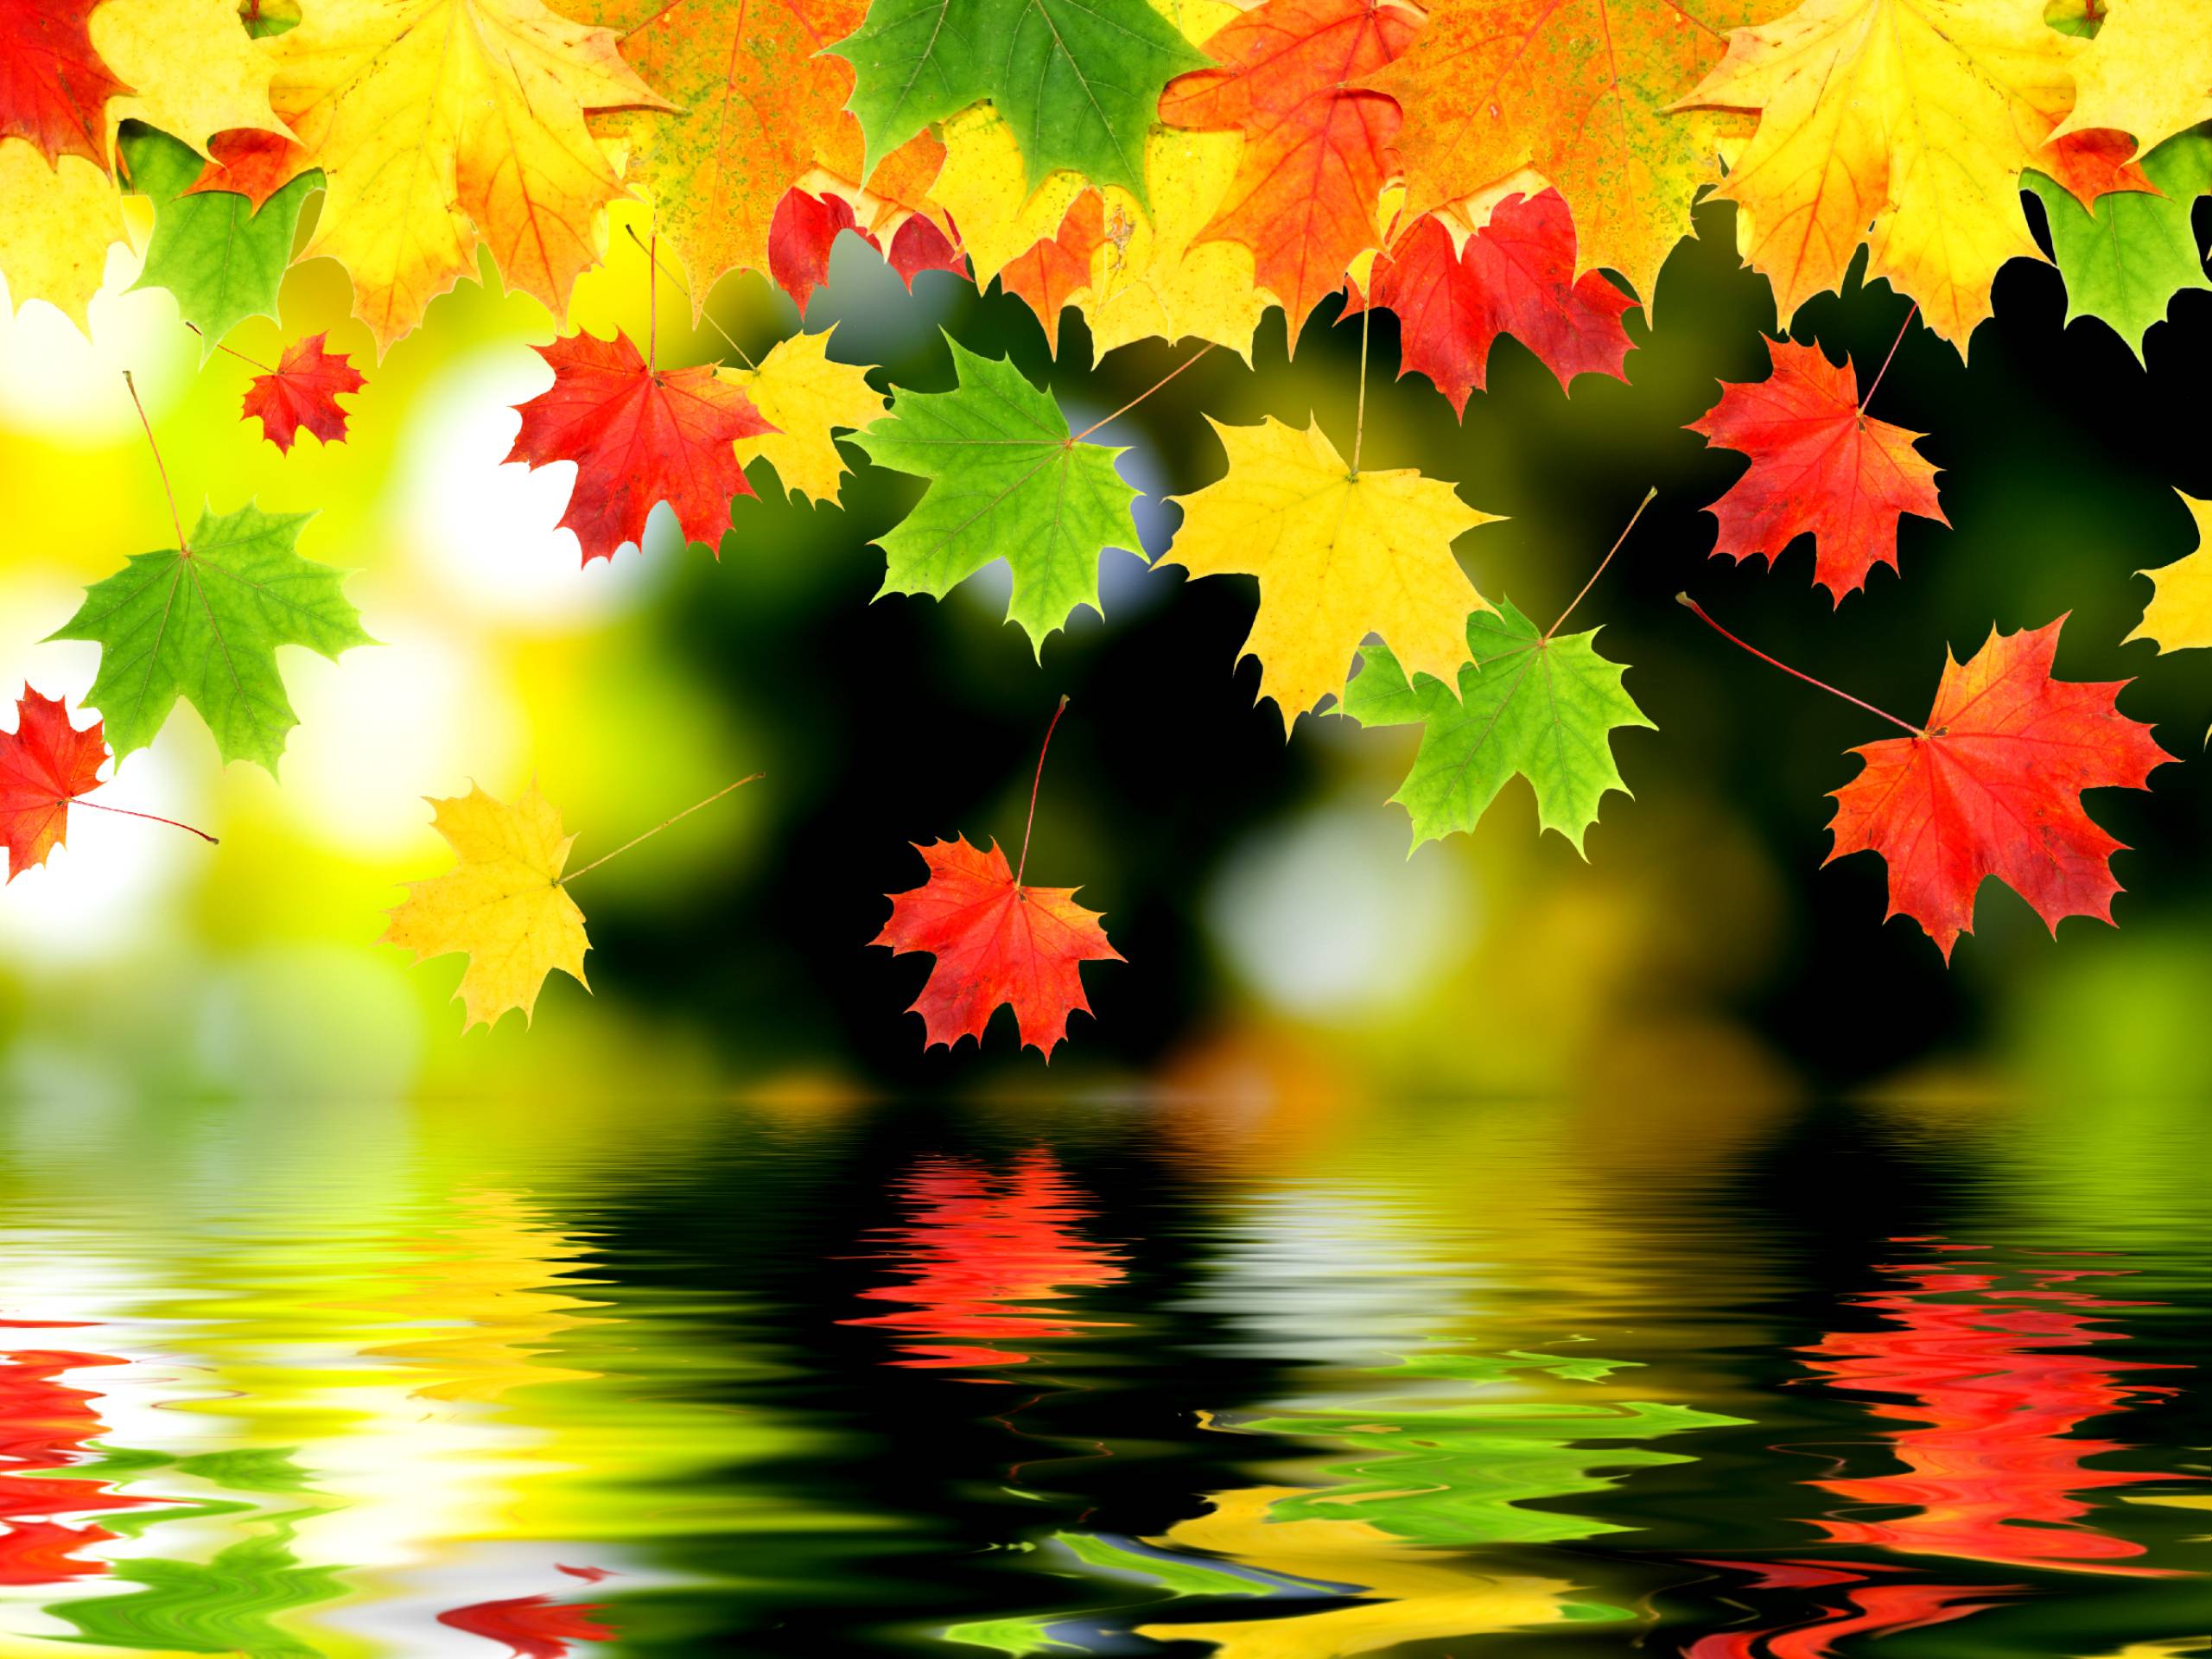 Falling autumn leaves in water Wallpaper